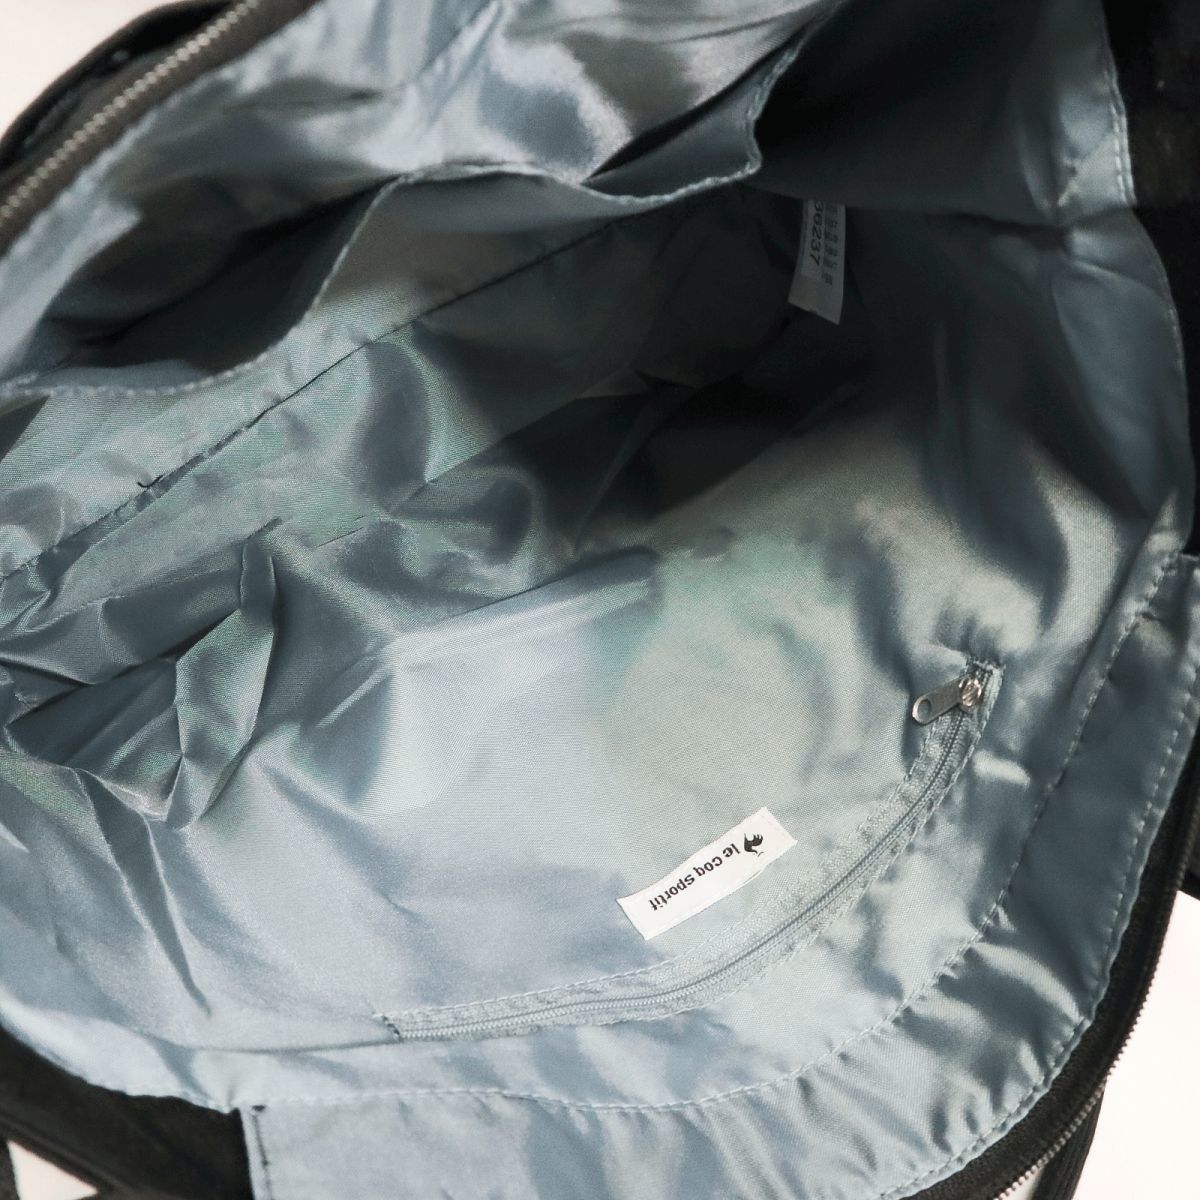 * Le Coq le coq sportif new goods convenience pocket fully simple shoulder tote bag BAG bag bag ash [36237-030] one six *QWER*